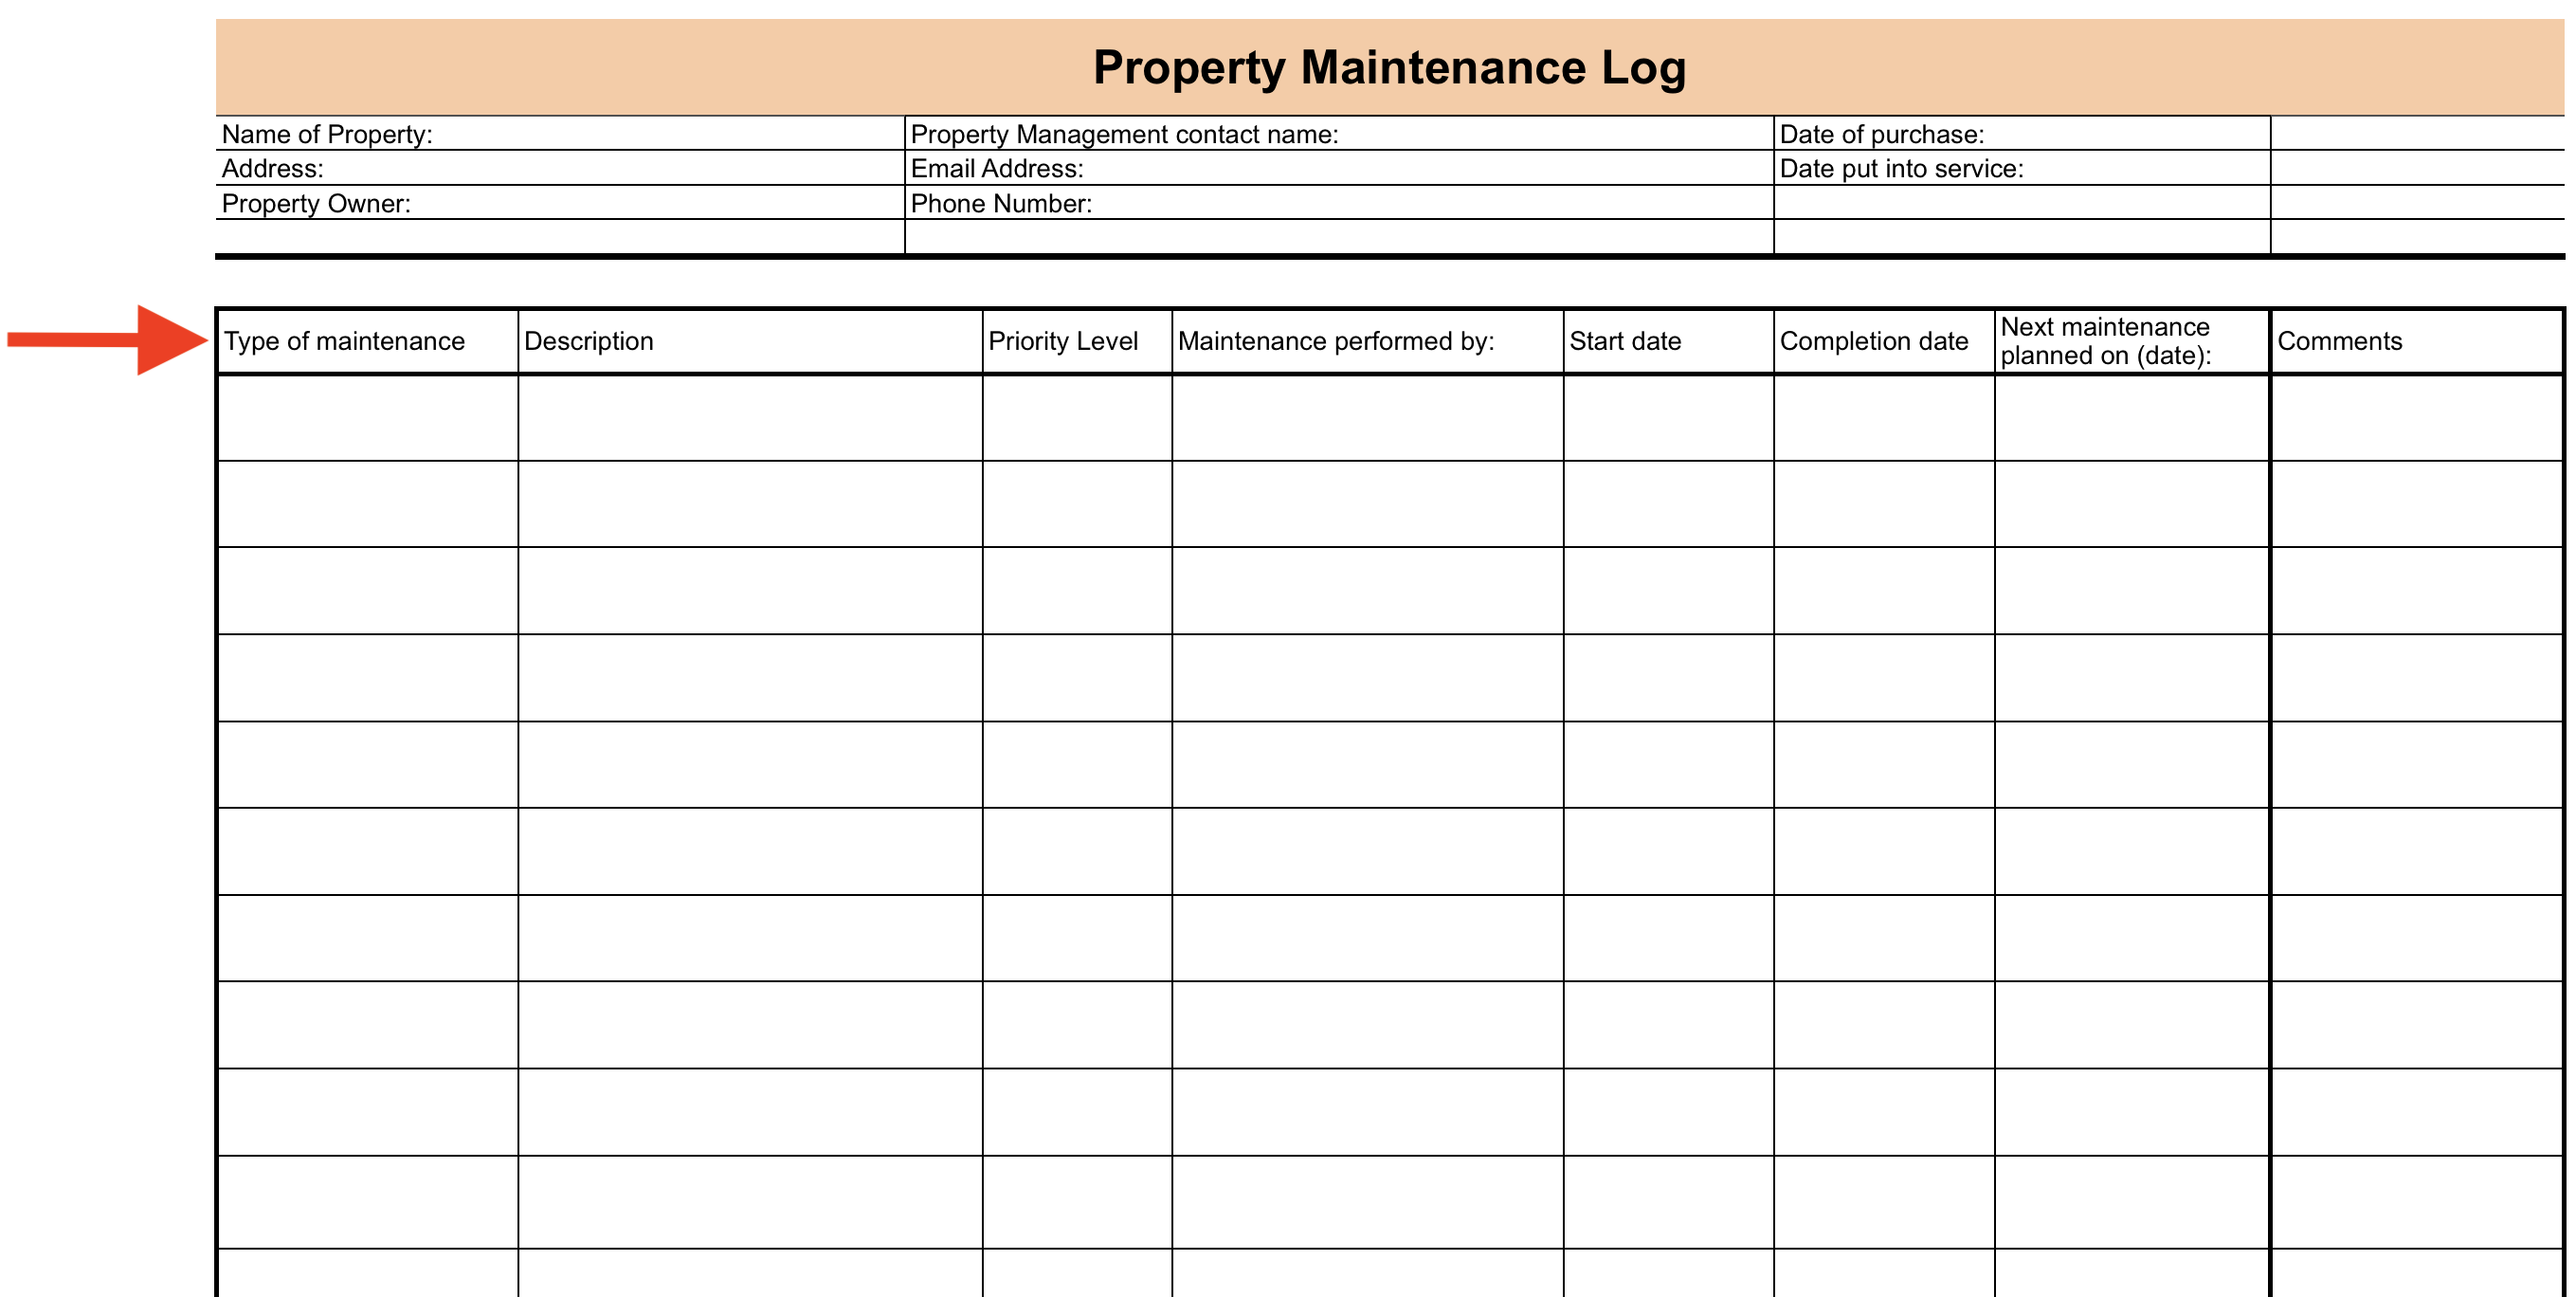 Maintenance Log Setup Checklist  Process Street With Regard To Building Maintenance Budget Template With Regard To Building Maintenance Budget Template